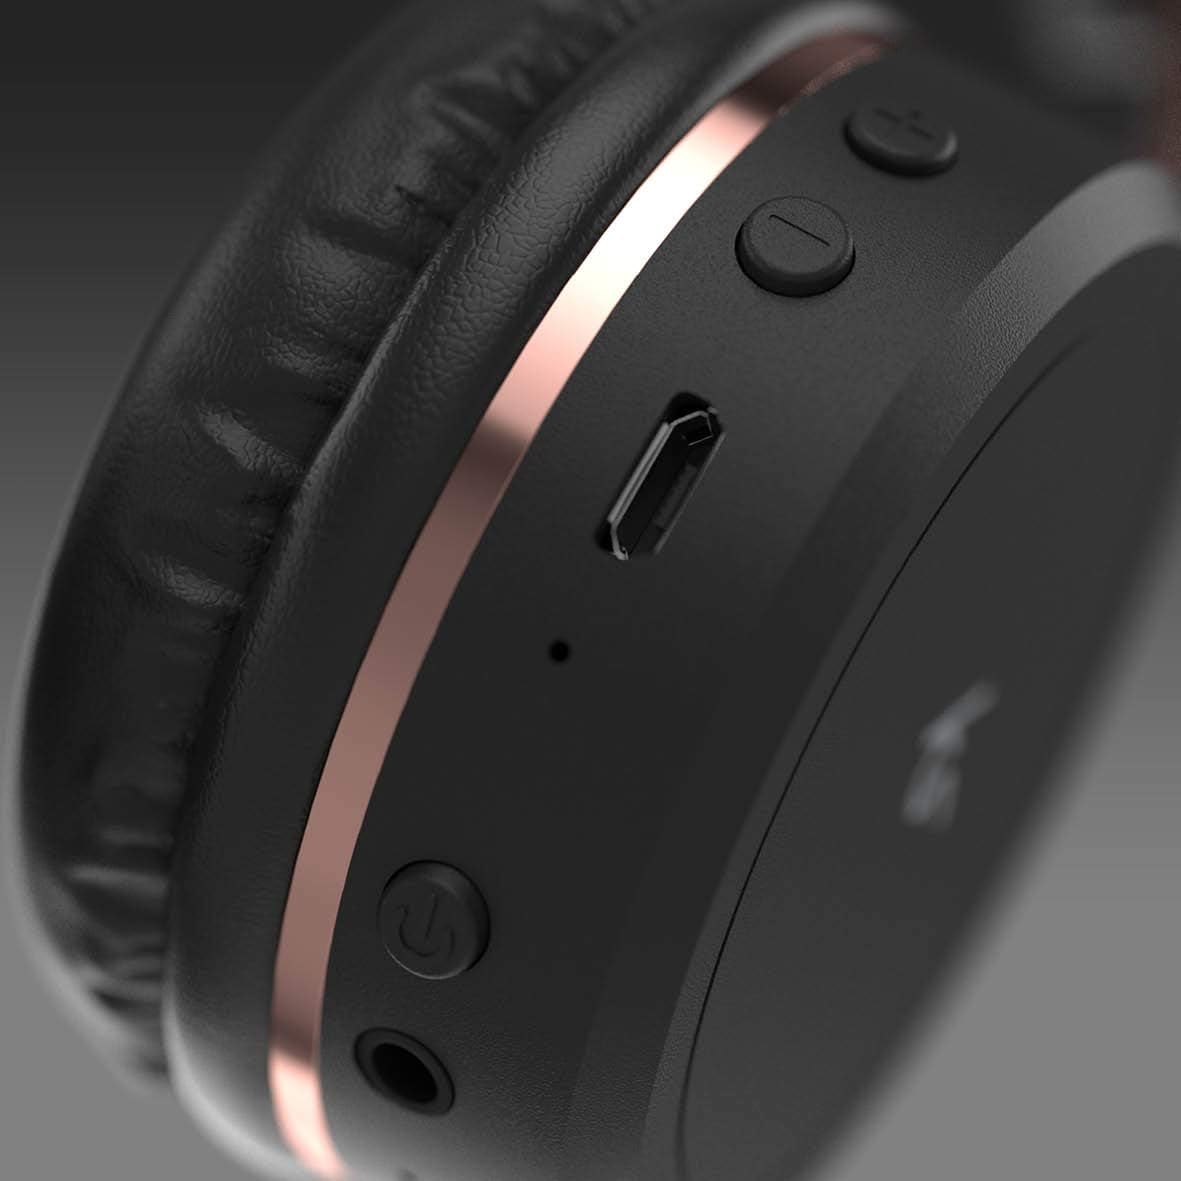 KitSound Metro X Wireless On-Ear Headphones - Black - Refurbished Excellent